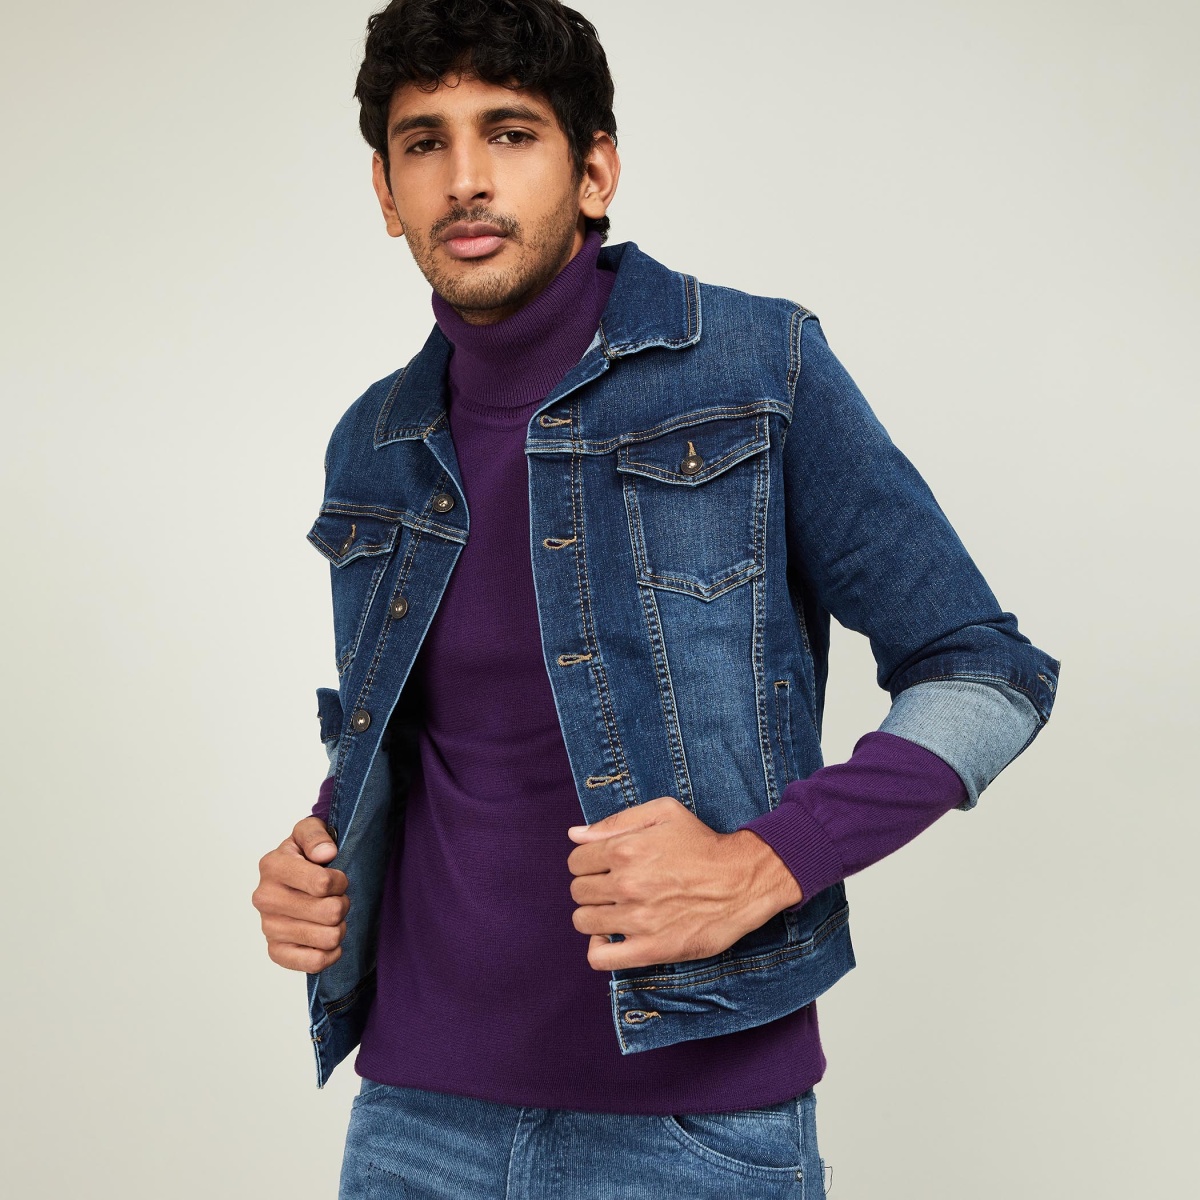 Share 188+ pepe jeans denim jacket